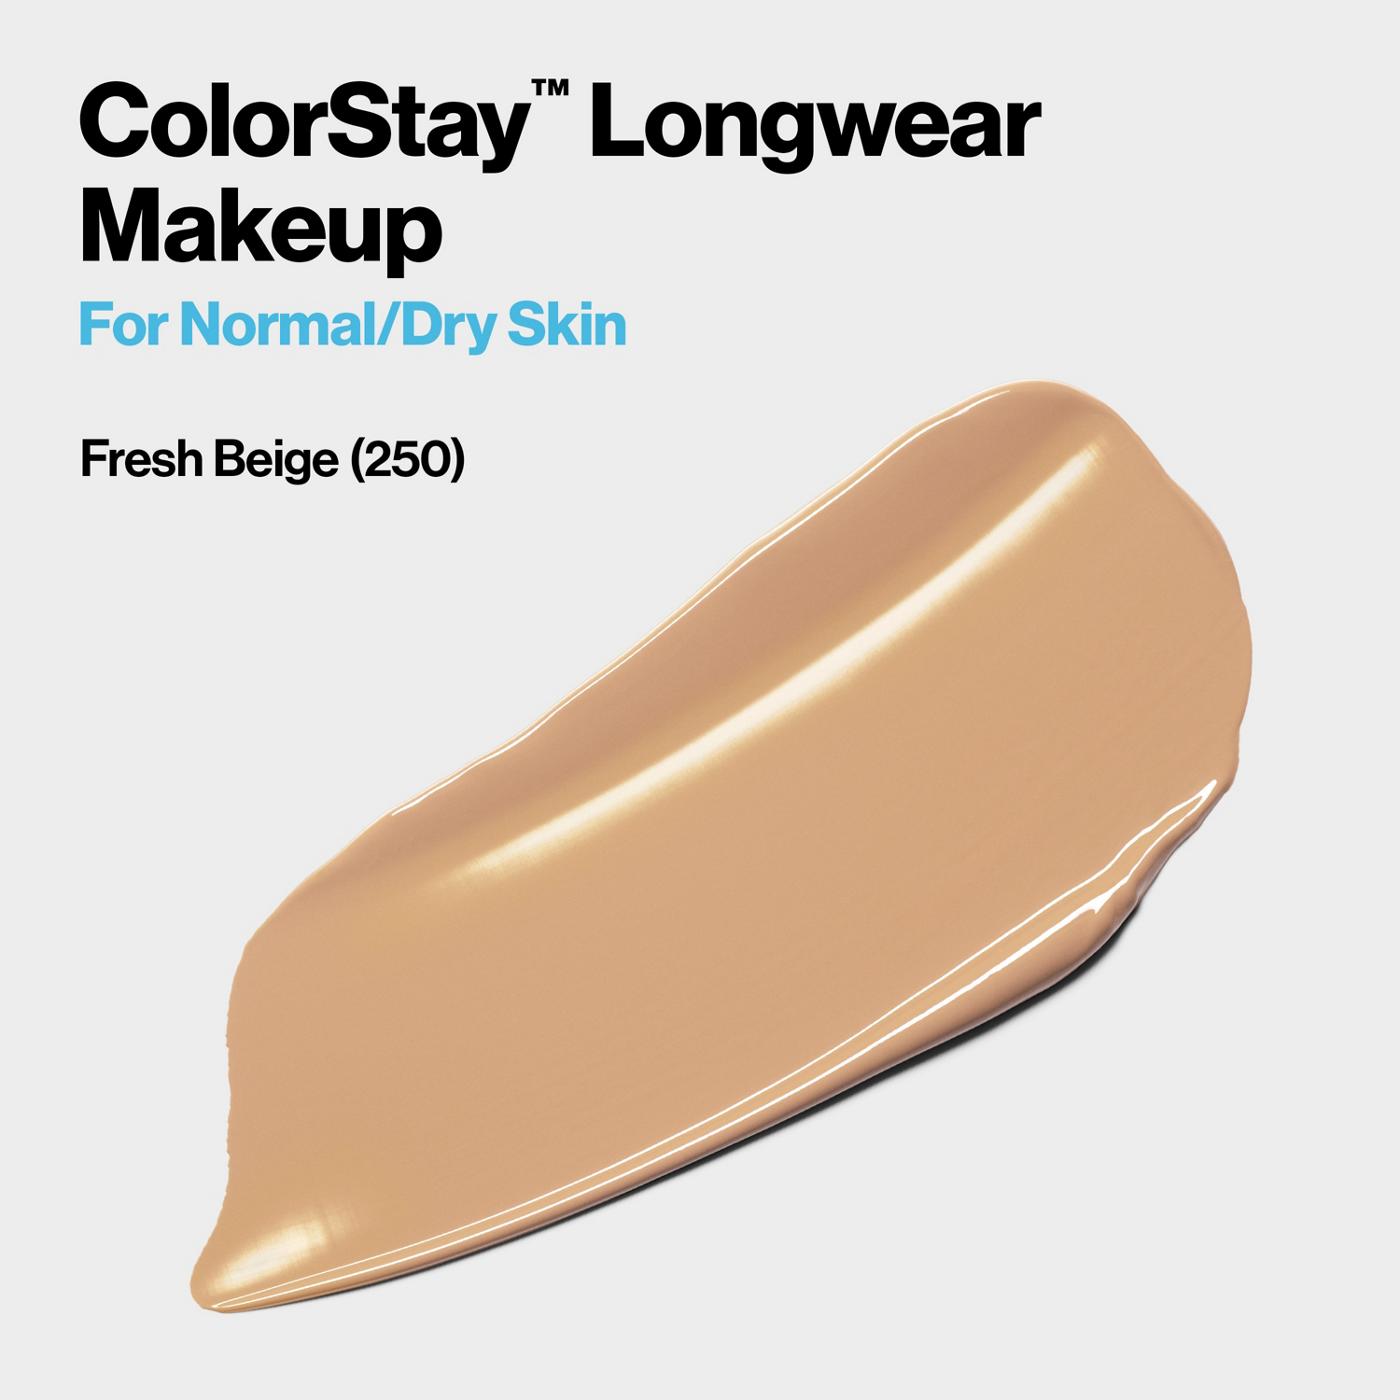 Revlon ColorStay Makeup for Normal/Dry Skin, 250 Fresh Beige; image 5 of 6